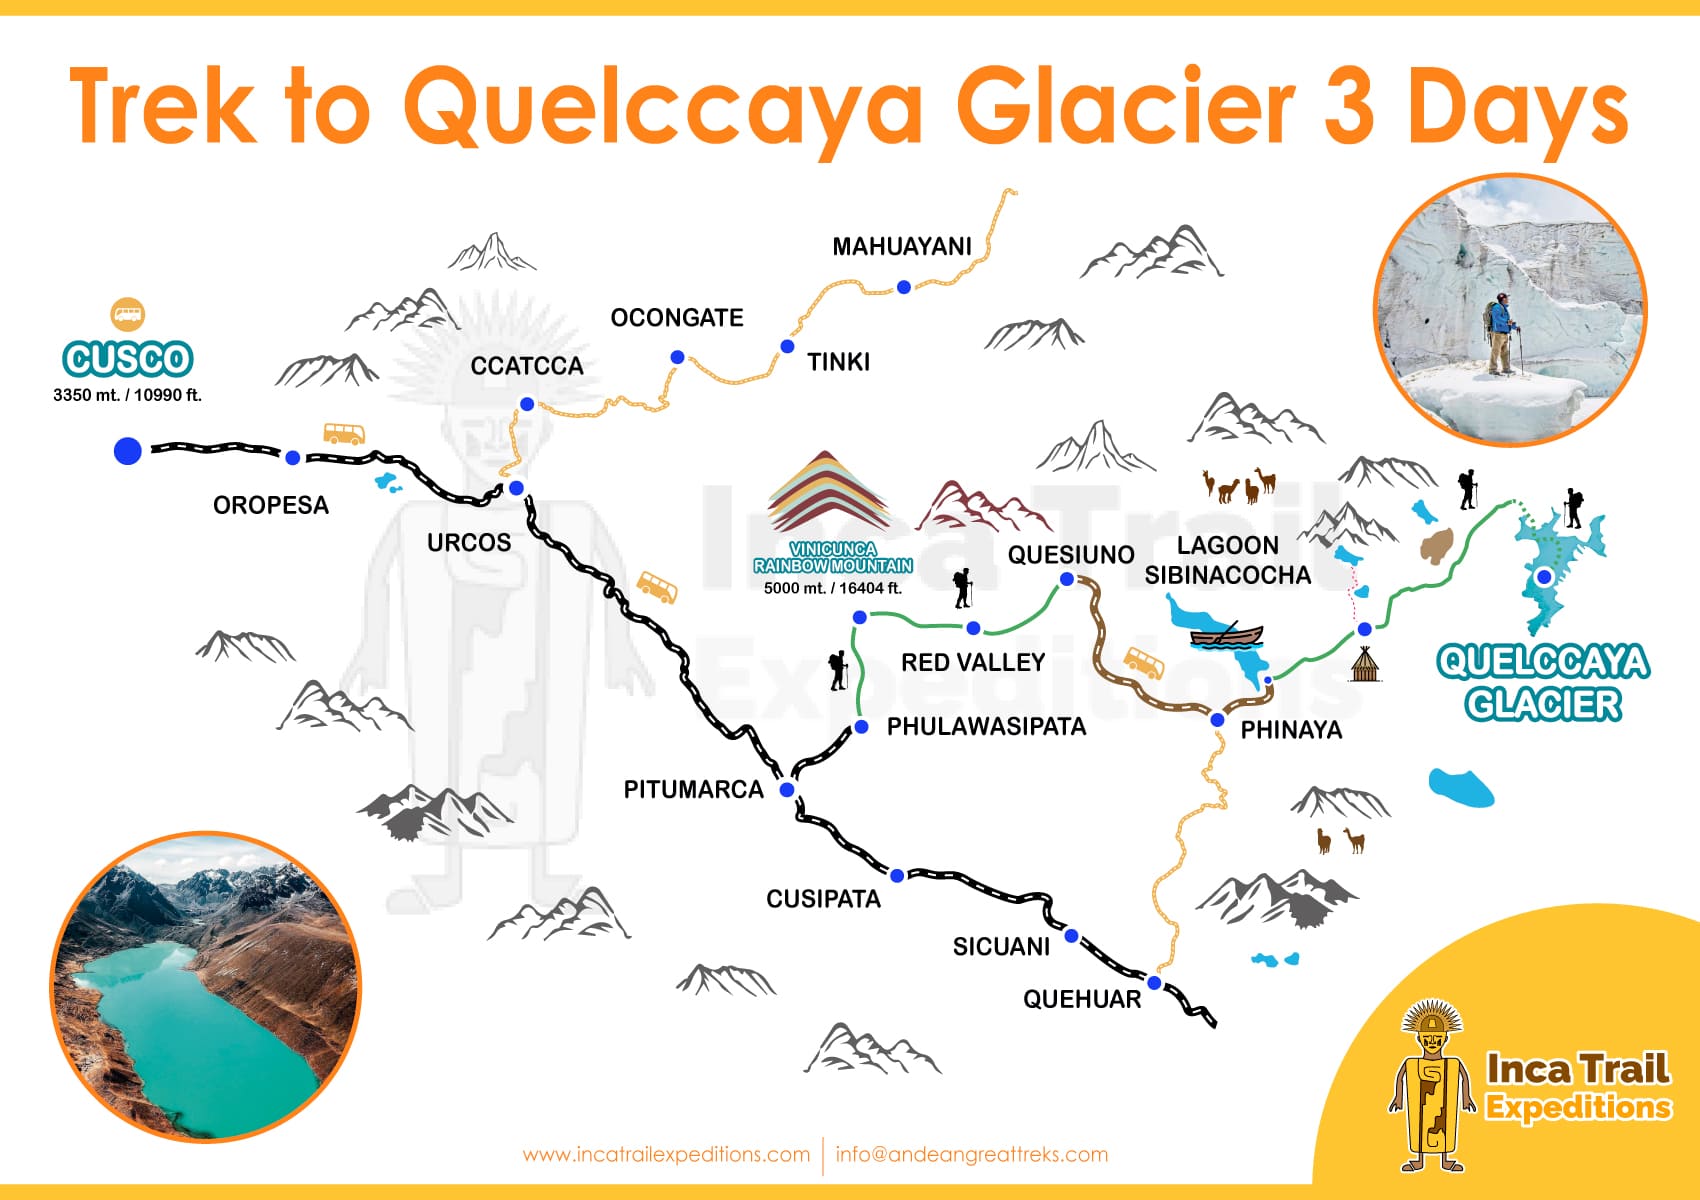 Vinicunca Rainbow Mountains & Quelccaya Glacier 3 Days